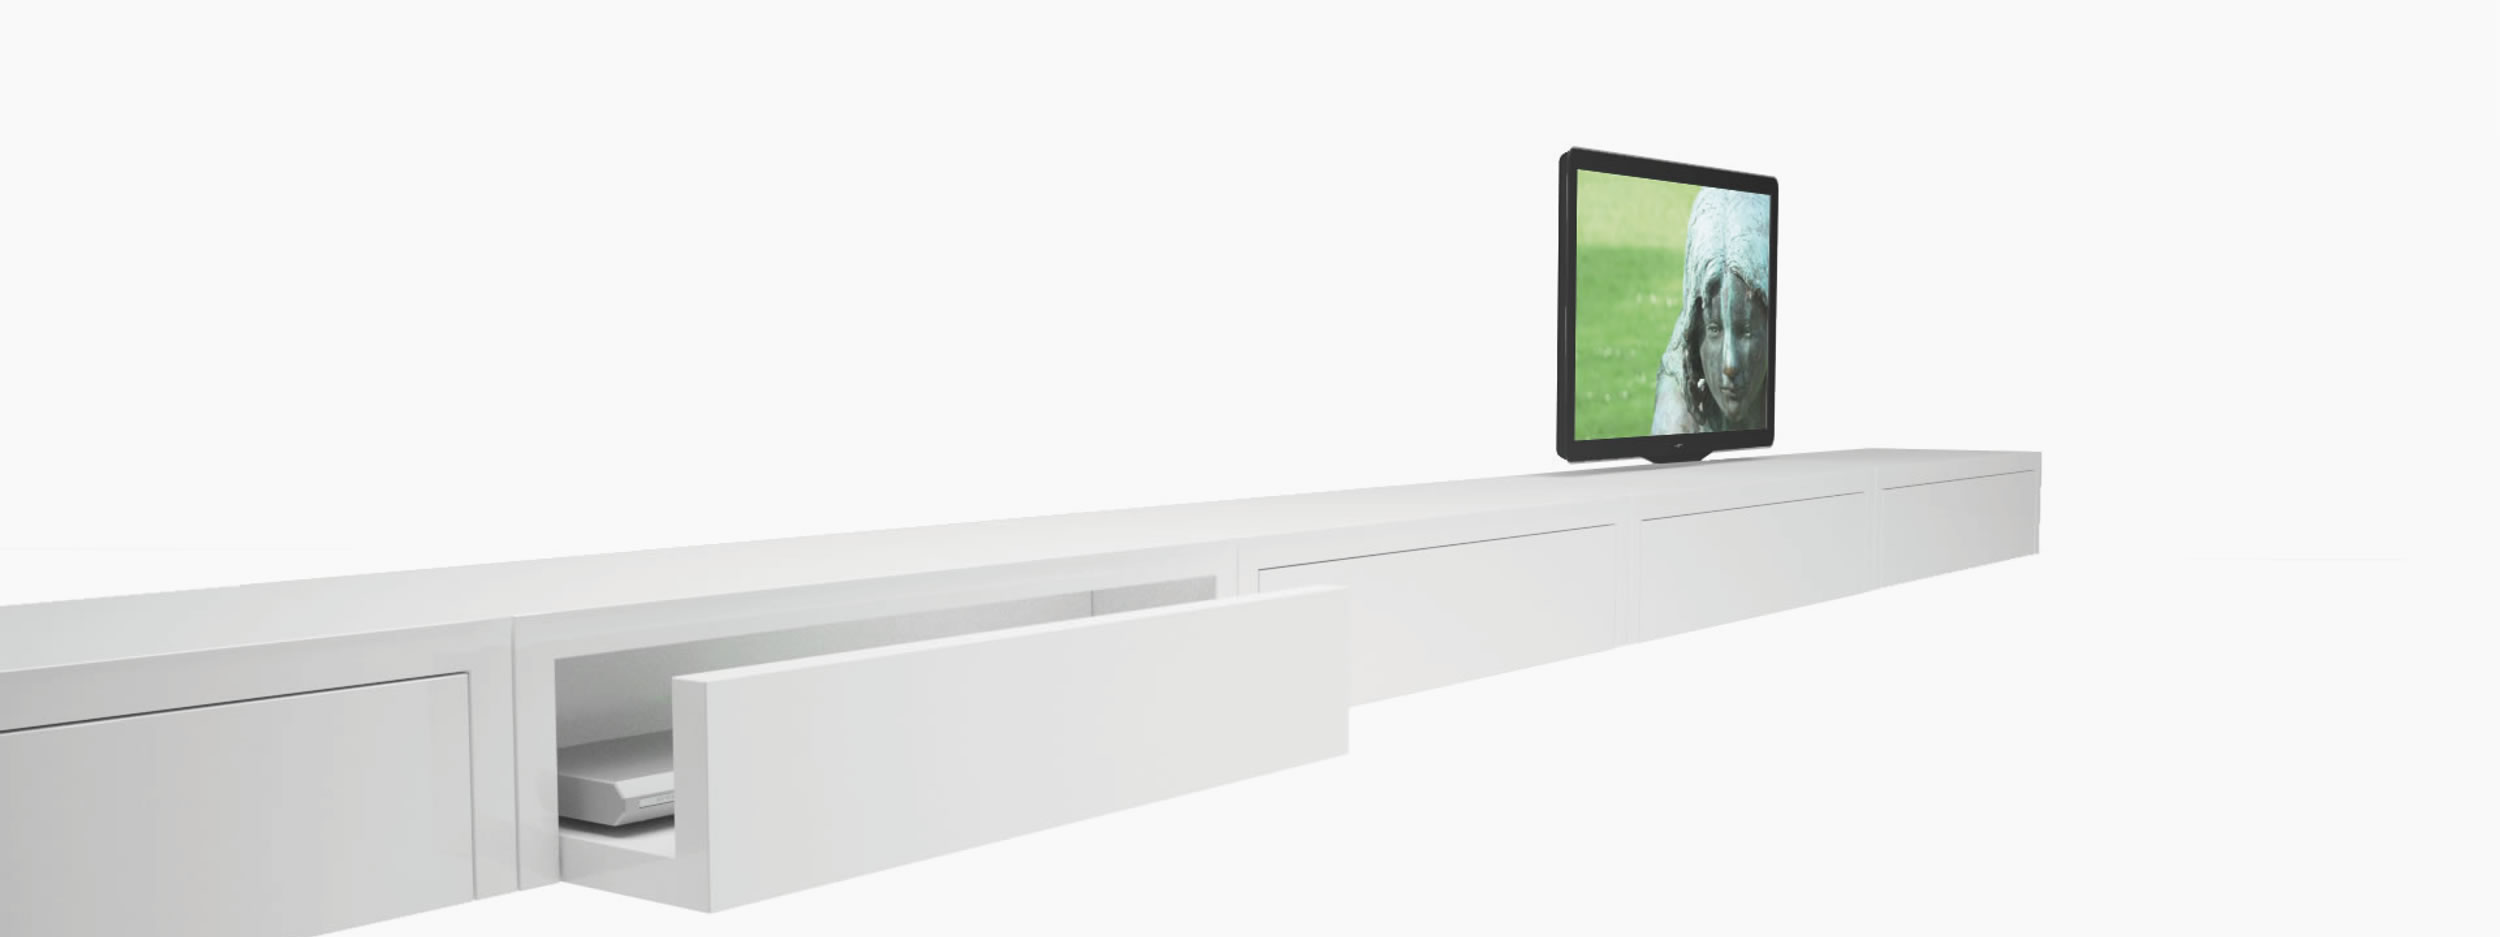 Sideboard quader weiss bed room Buero minimalist design Sideboards FS 51 FELIX SCHWAKE RECHTECK